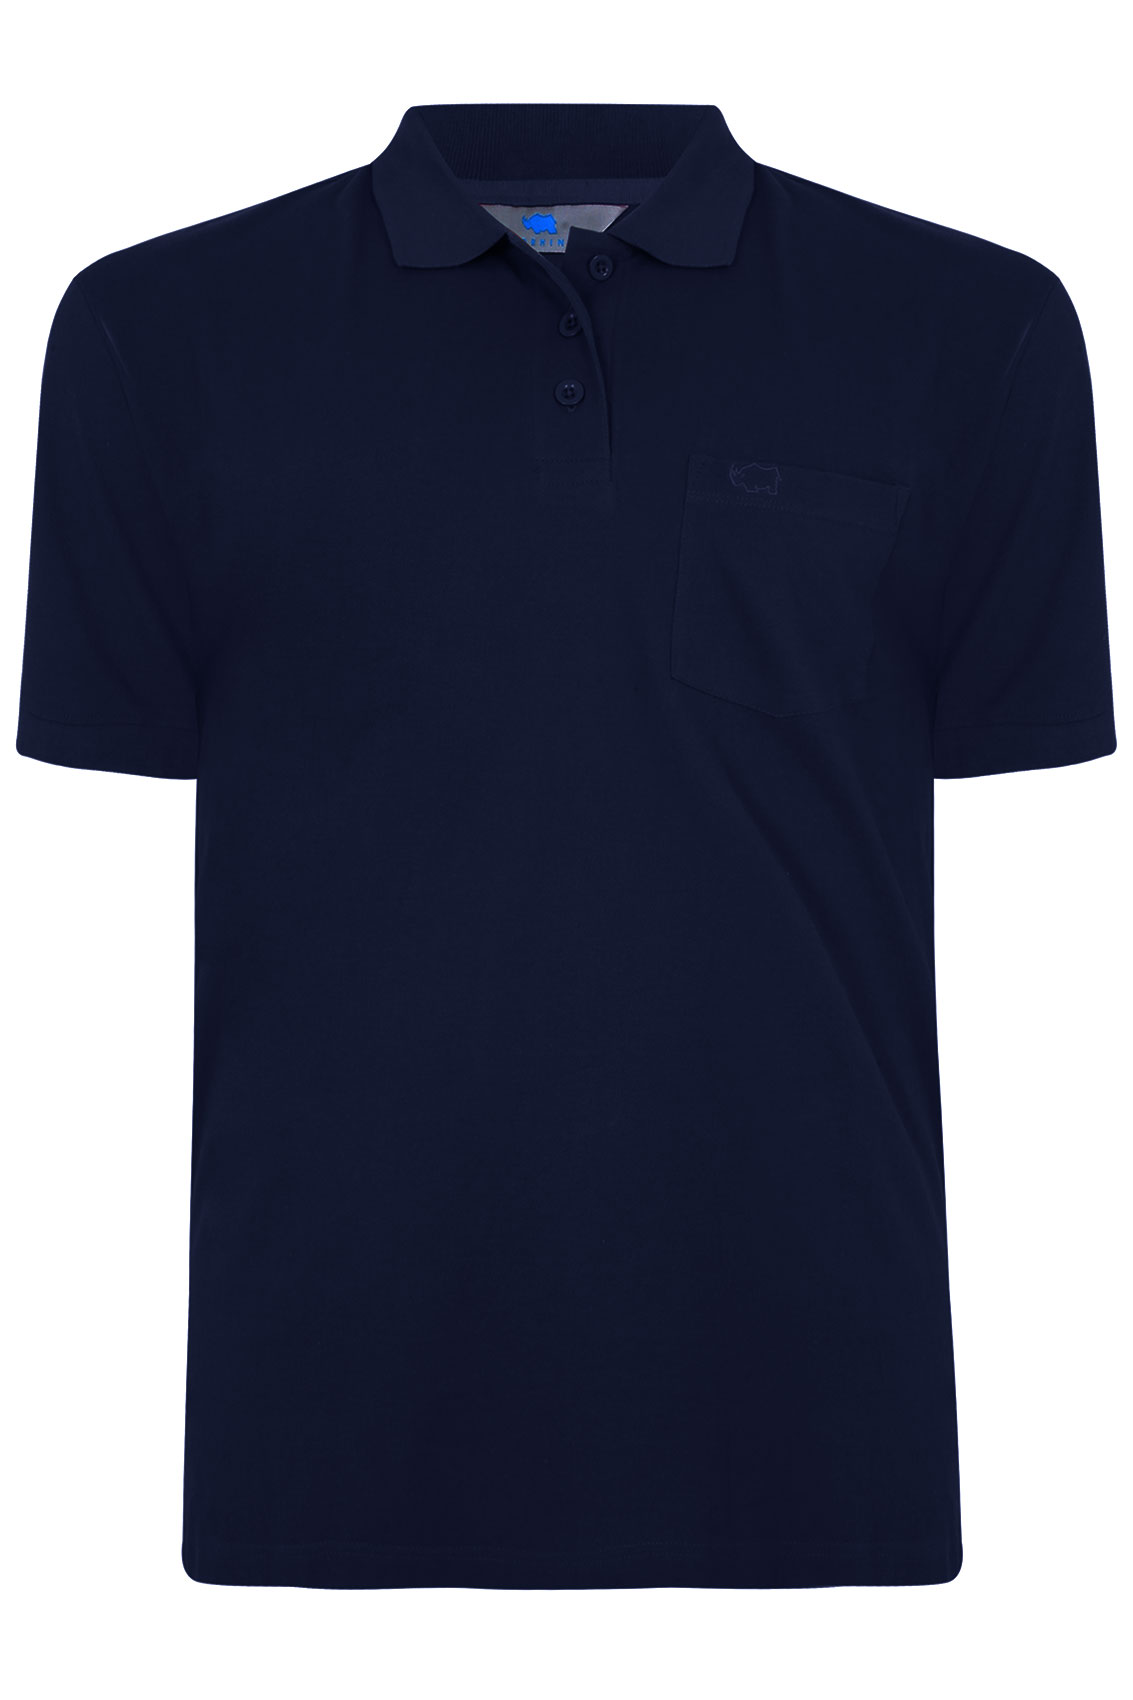 BadRhino Navy Plain Polo Shirt Extra large sizes M,L,XL,2XL,3XL,4XL,5XL ...